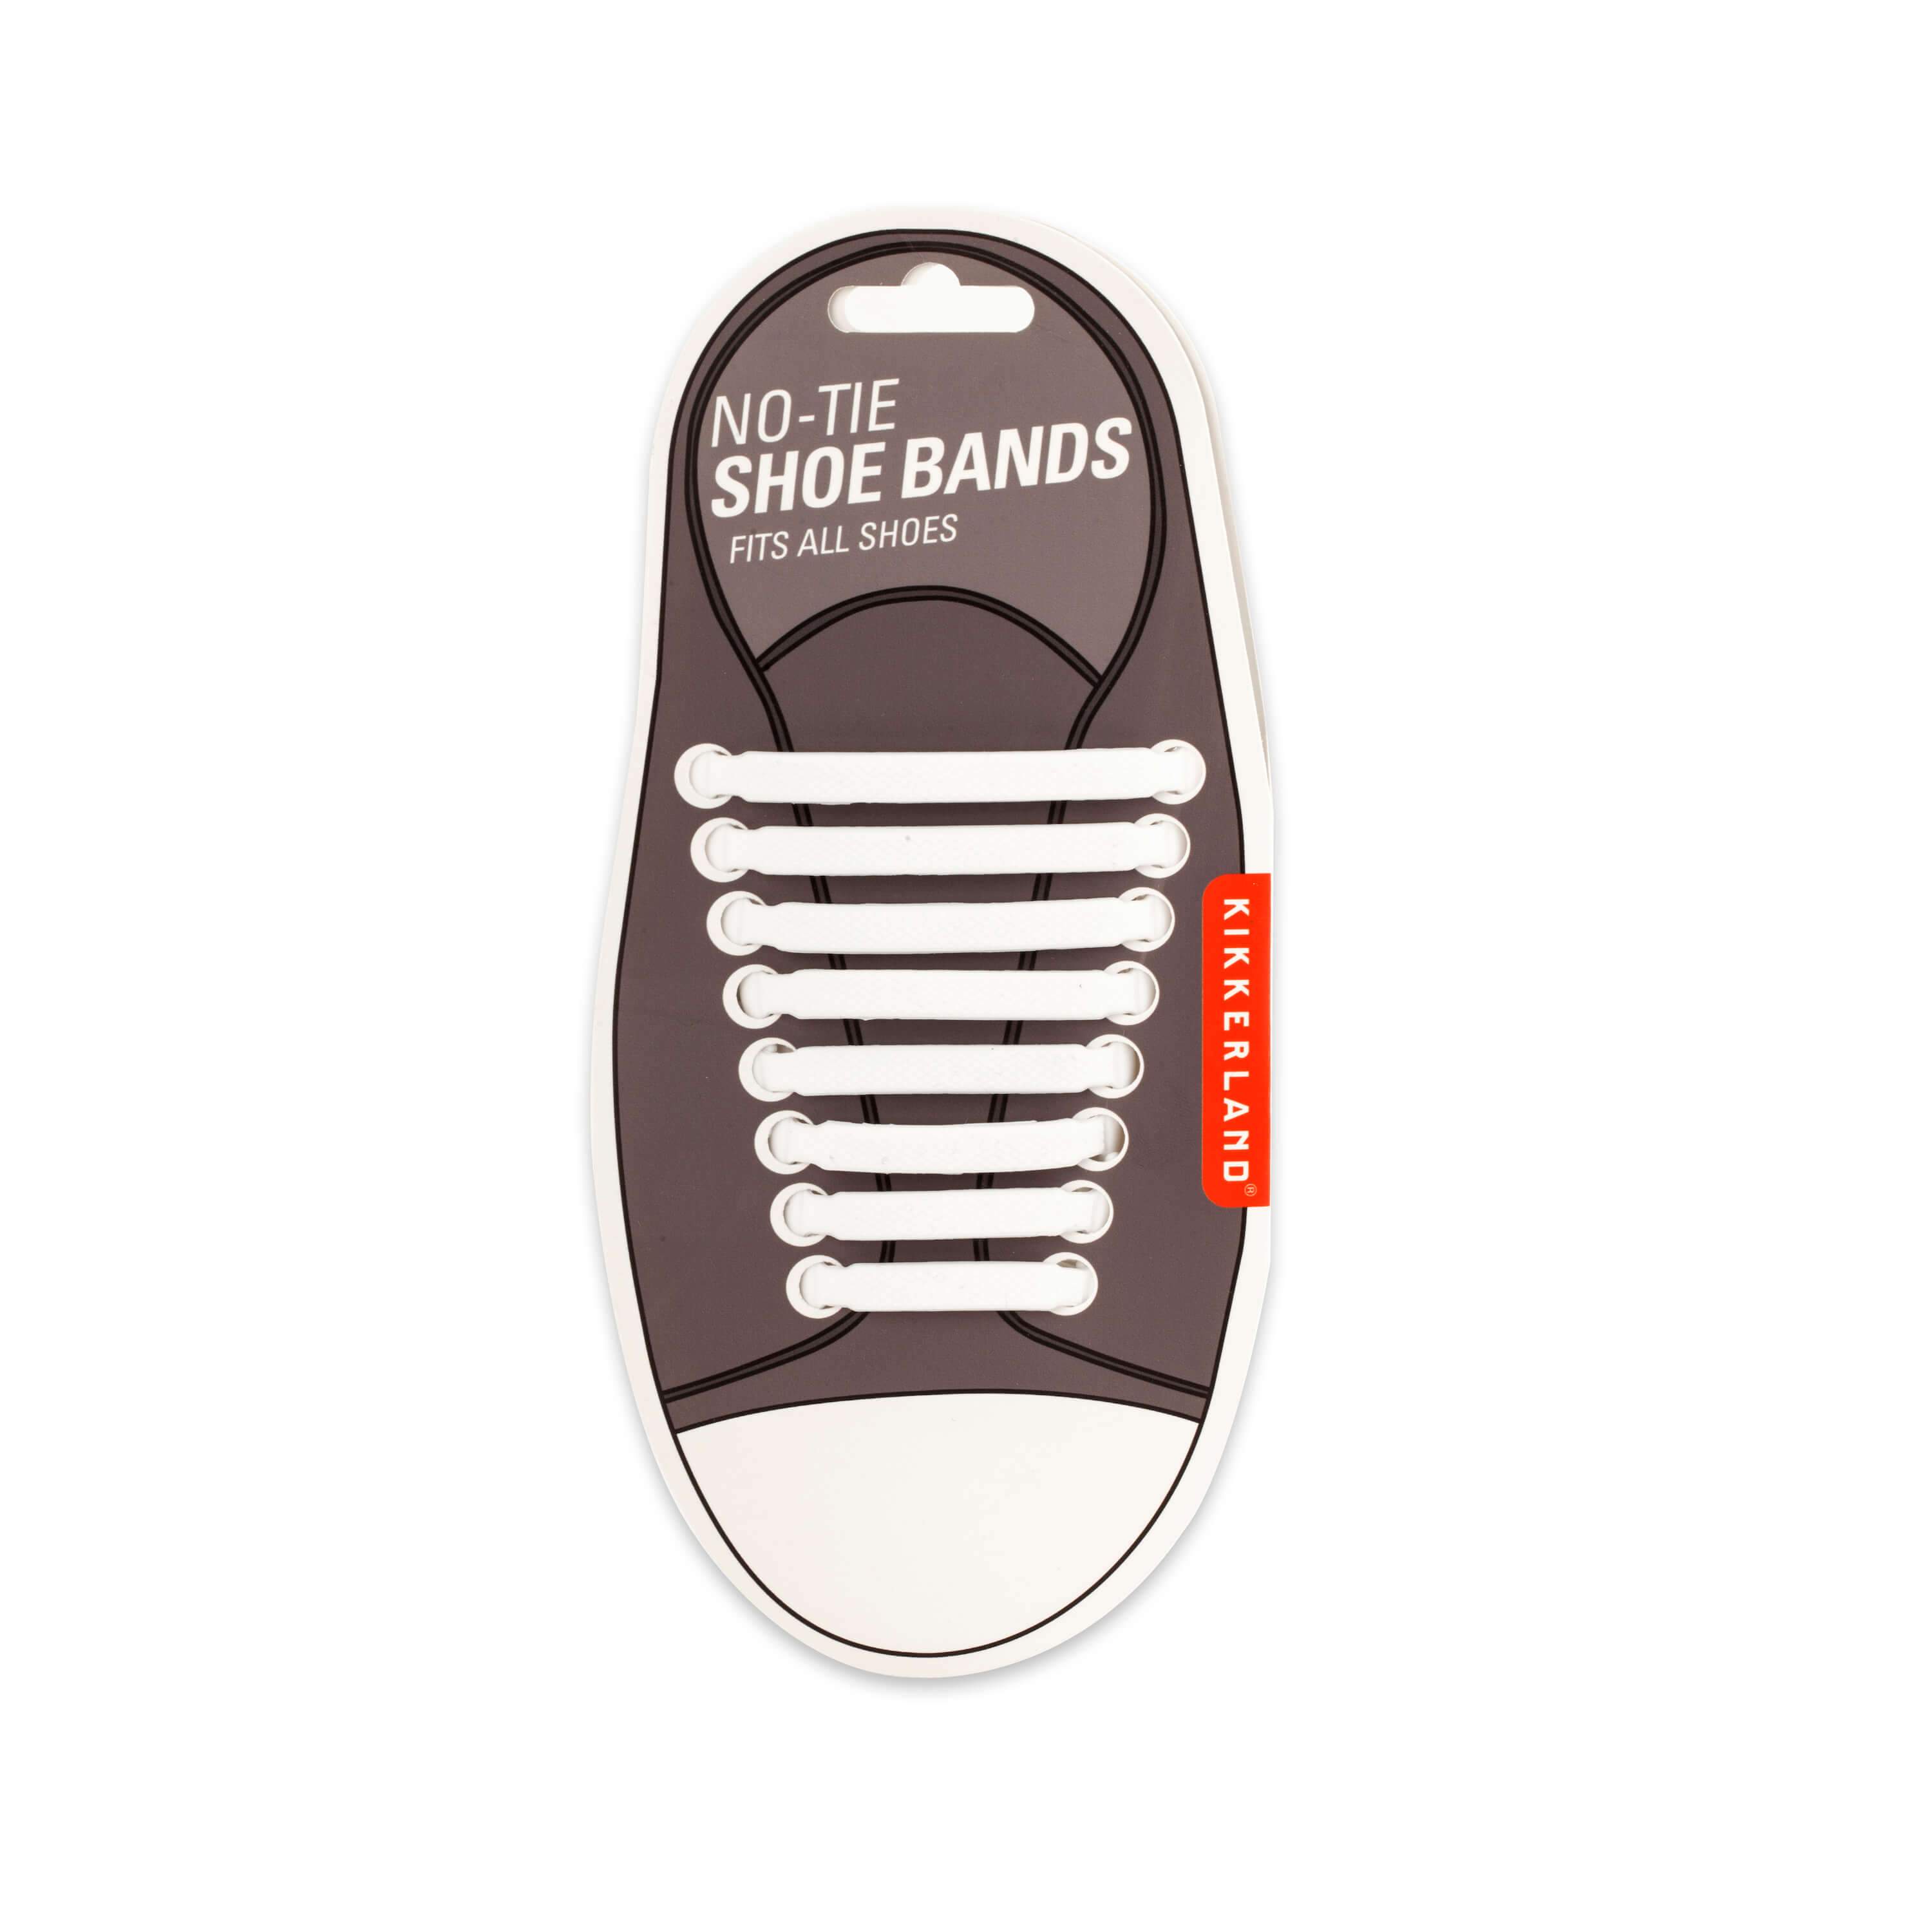 No-tie shoe bands - Lacets sans noeud* Kikkerland 